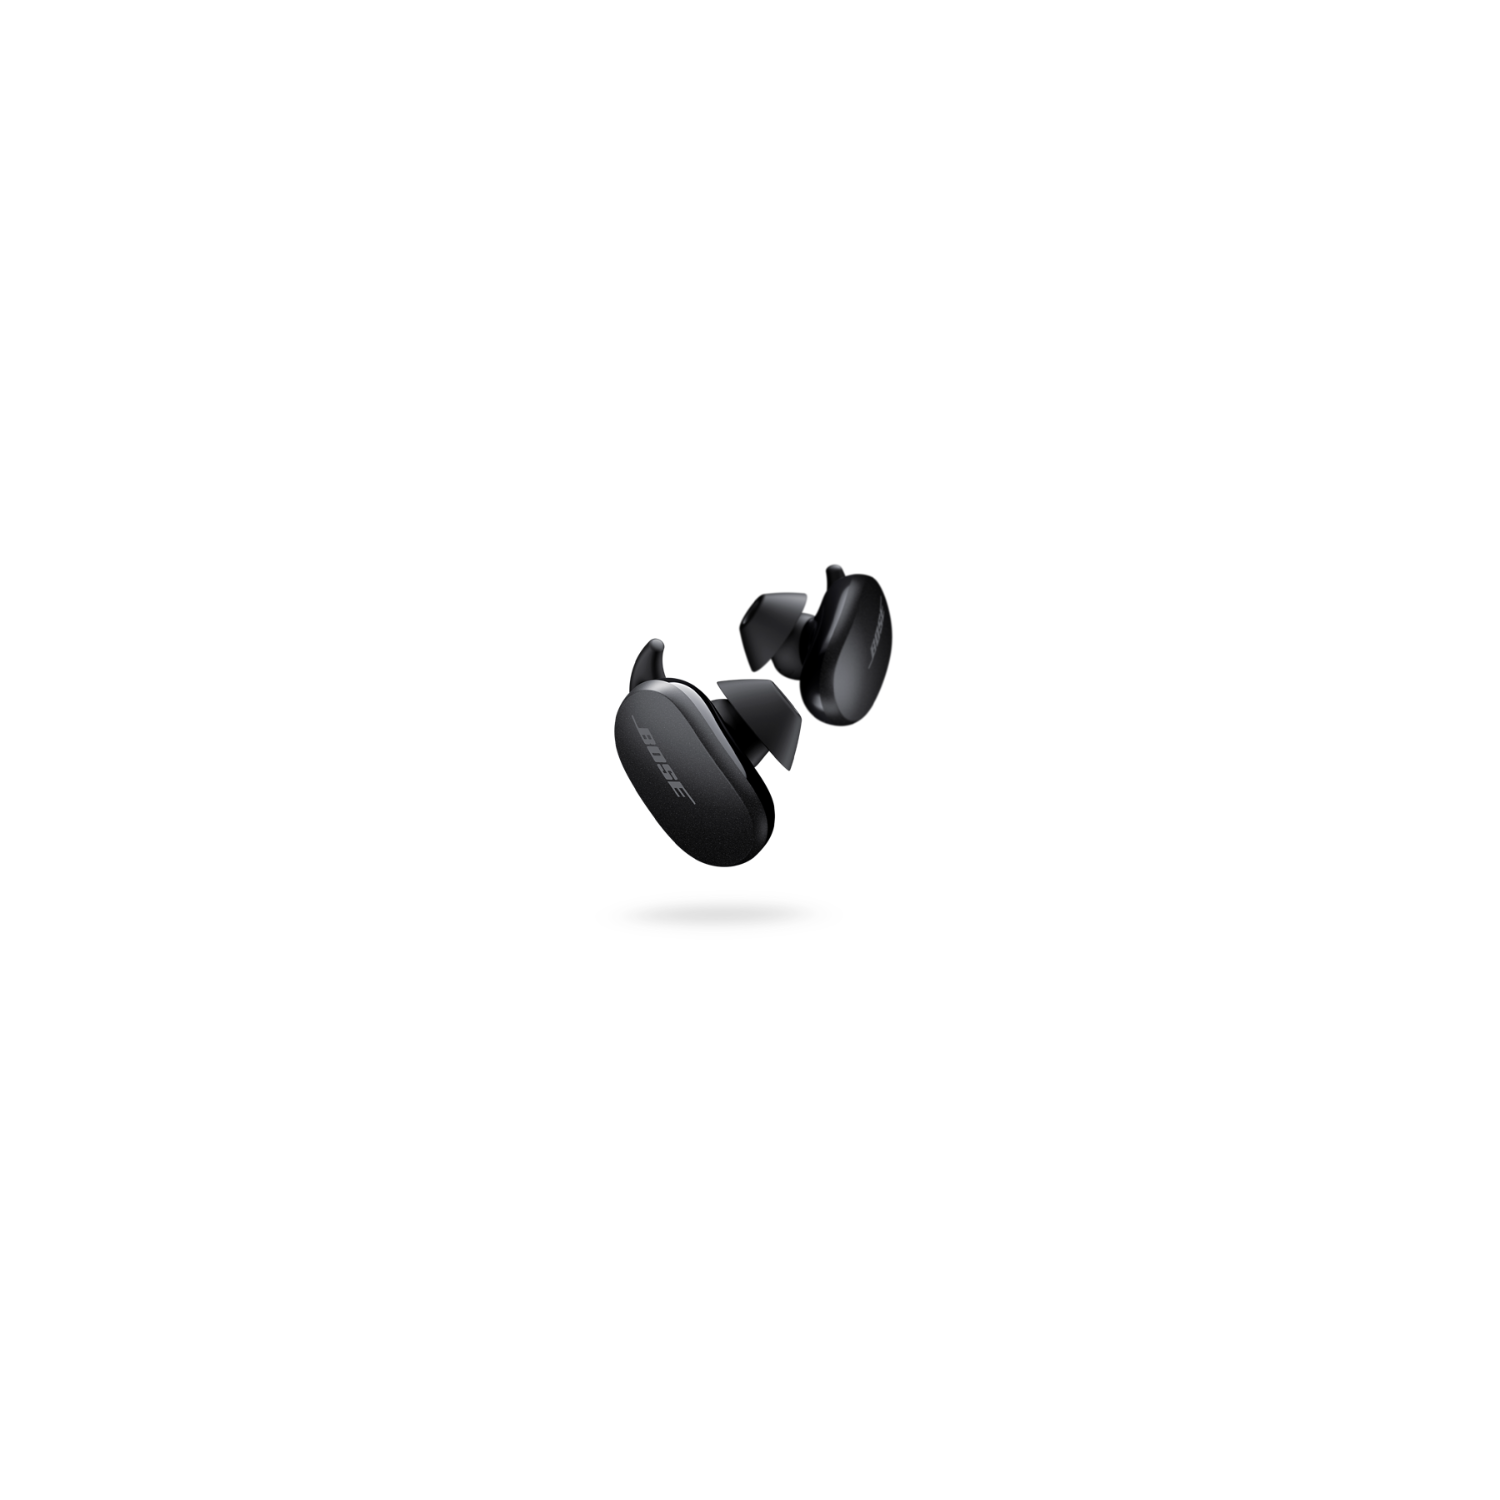 Bose QuietComfort In-Ear Noise Cancelling Truly Wireless Headphones - Triple Black - Certified Refurbished